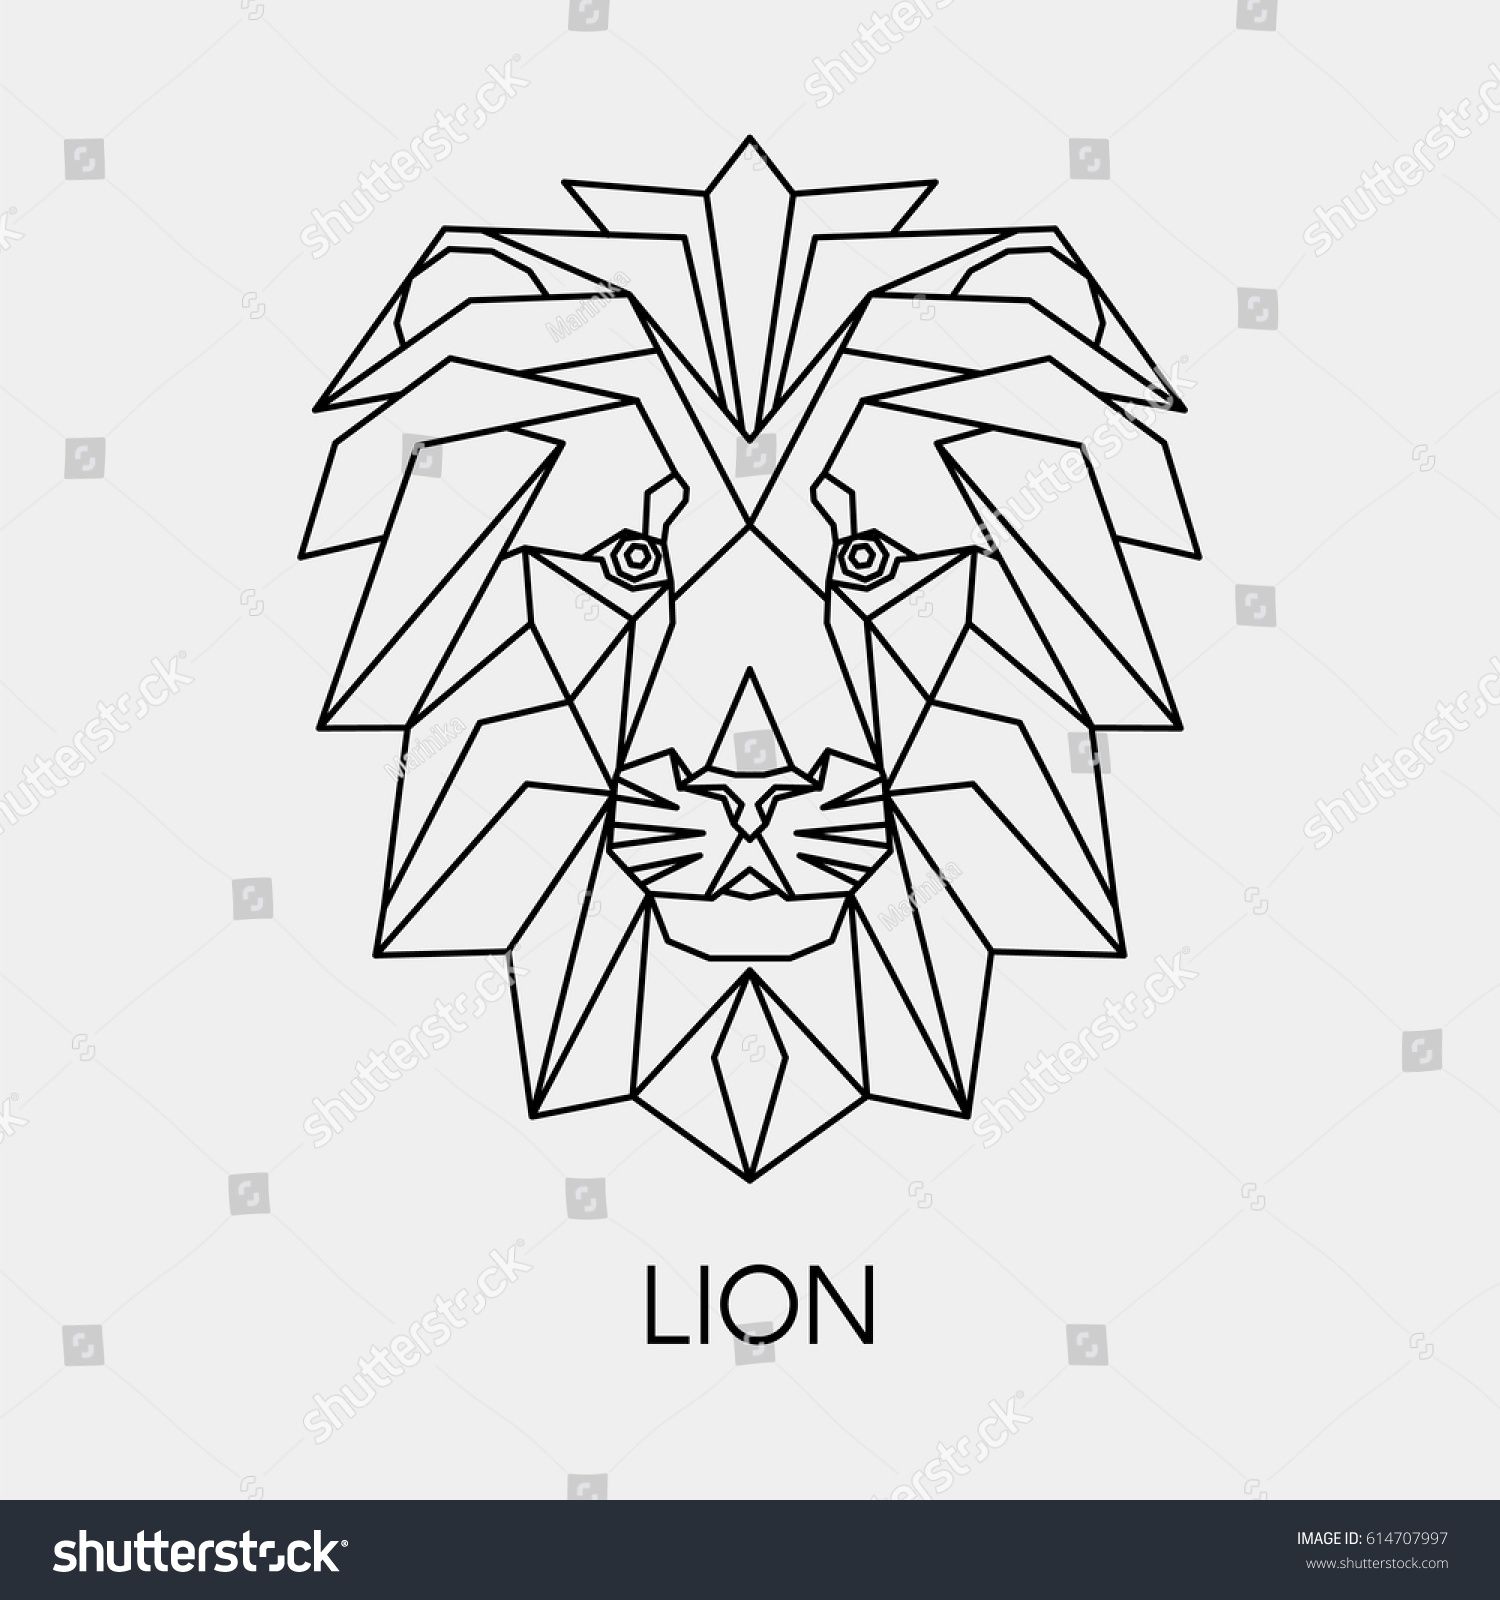 Голова Льва из линий